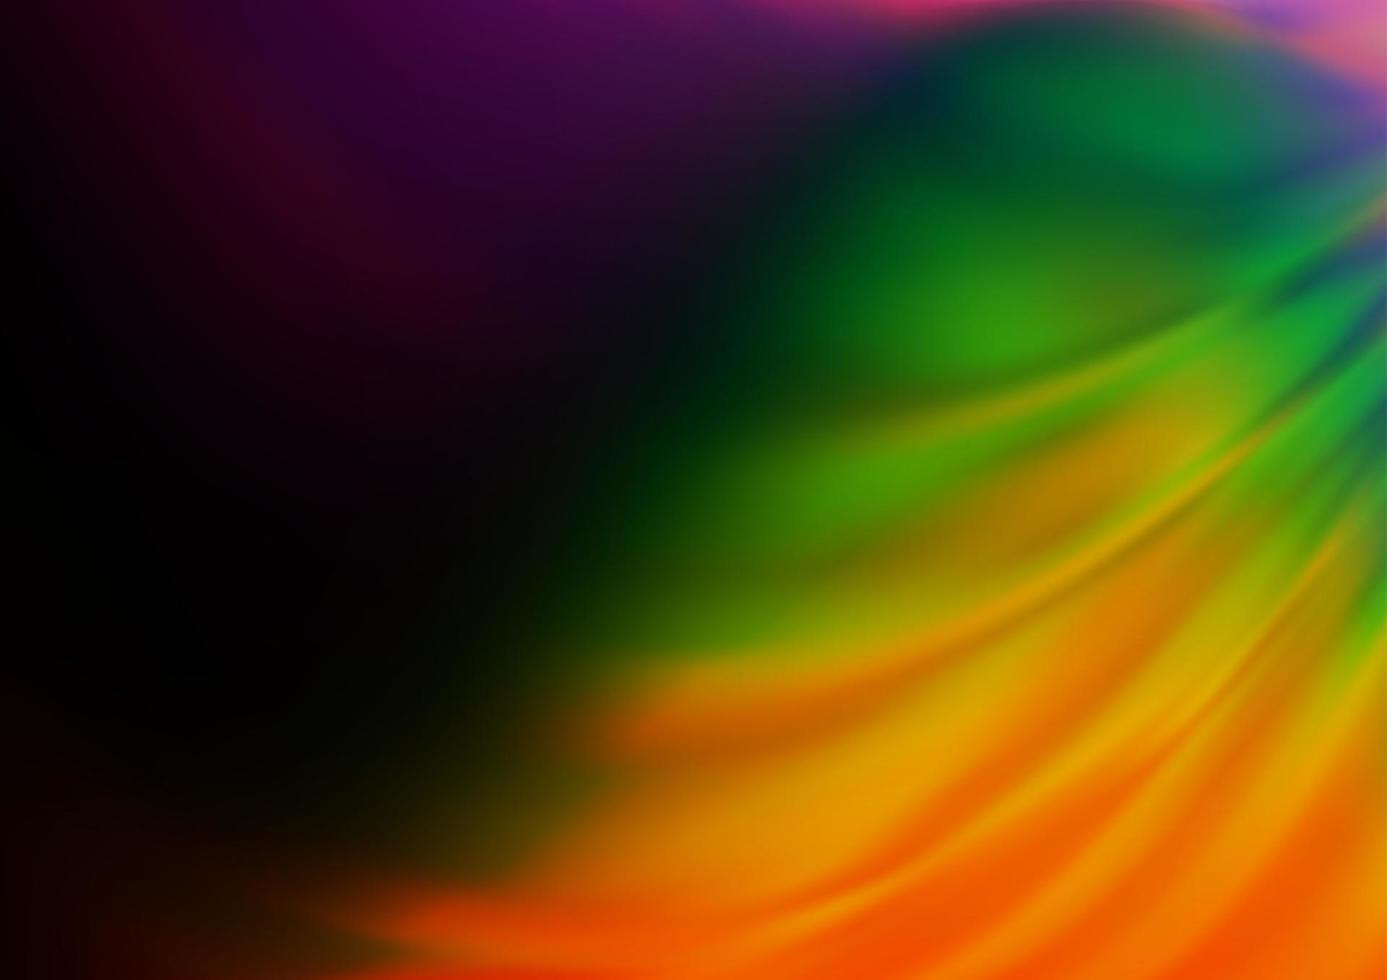 Dark Multicolor, Rainbow vector blurred shine abstract background.